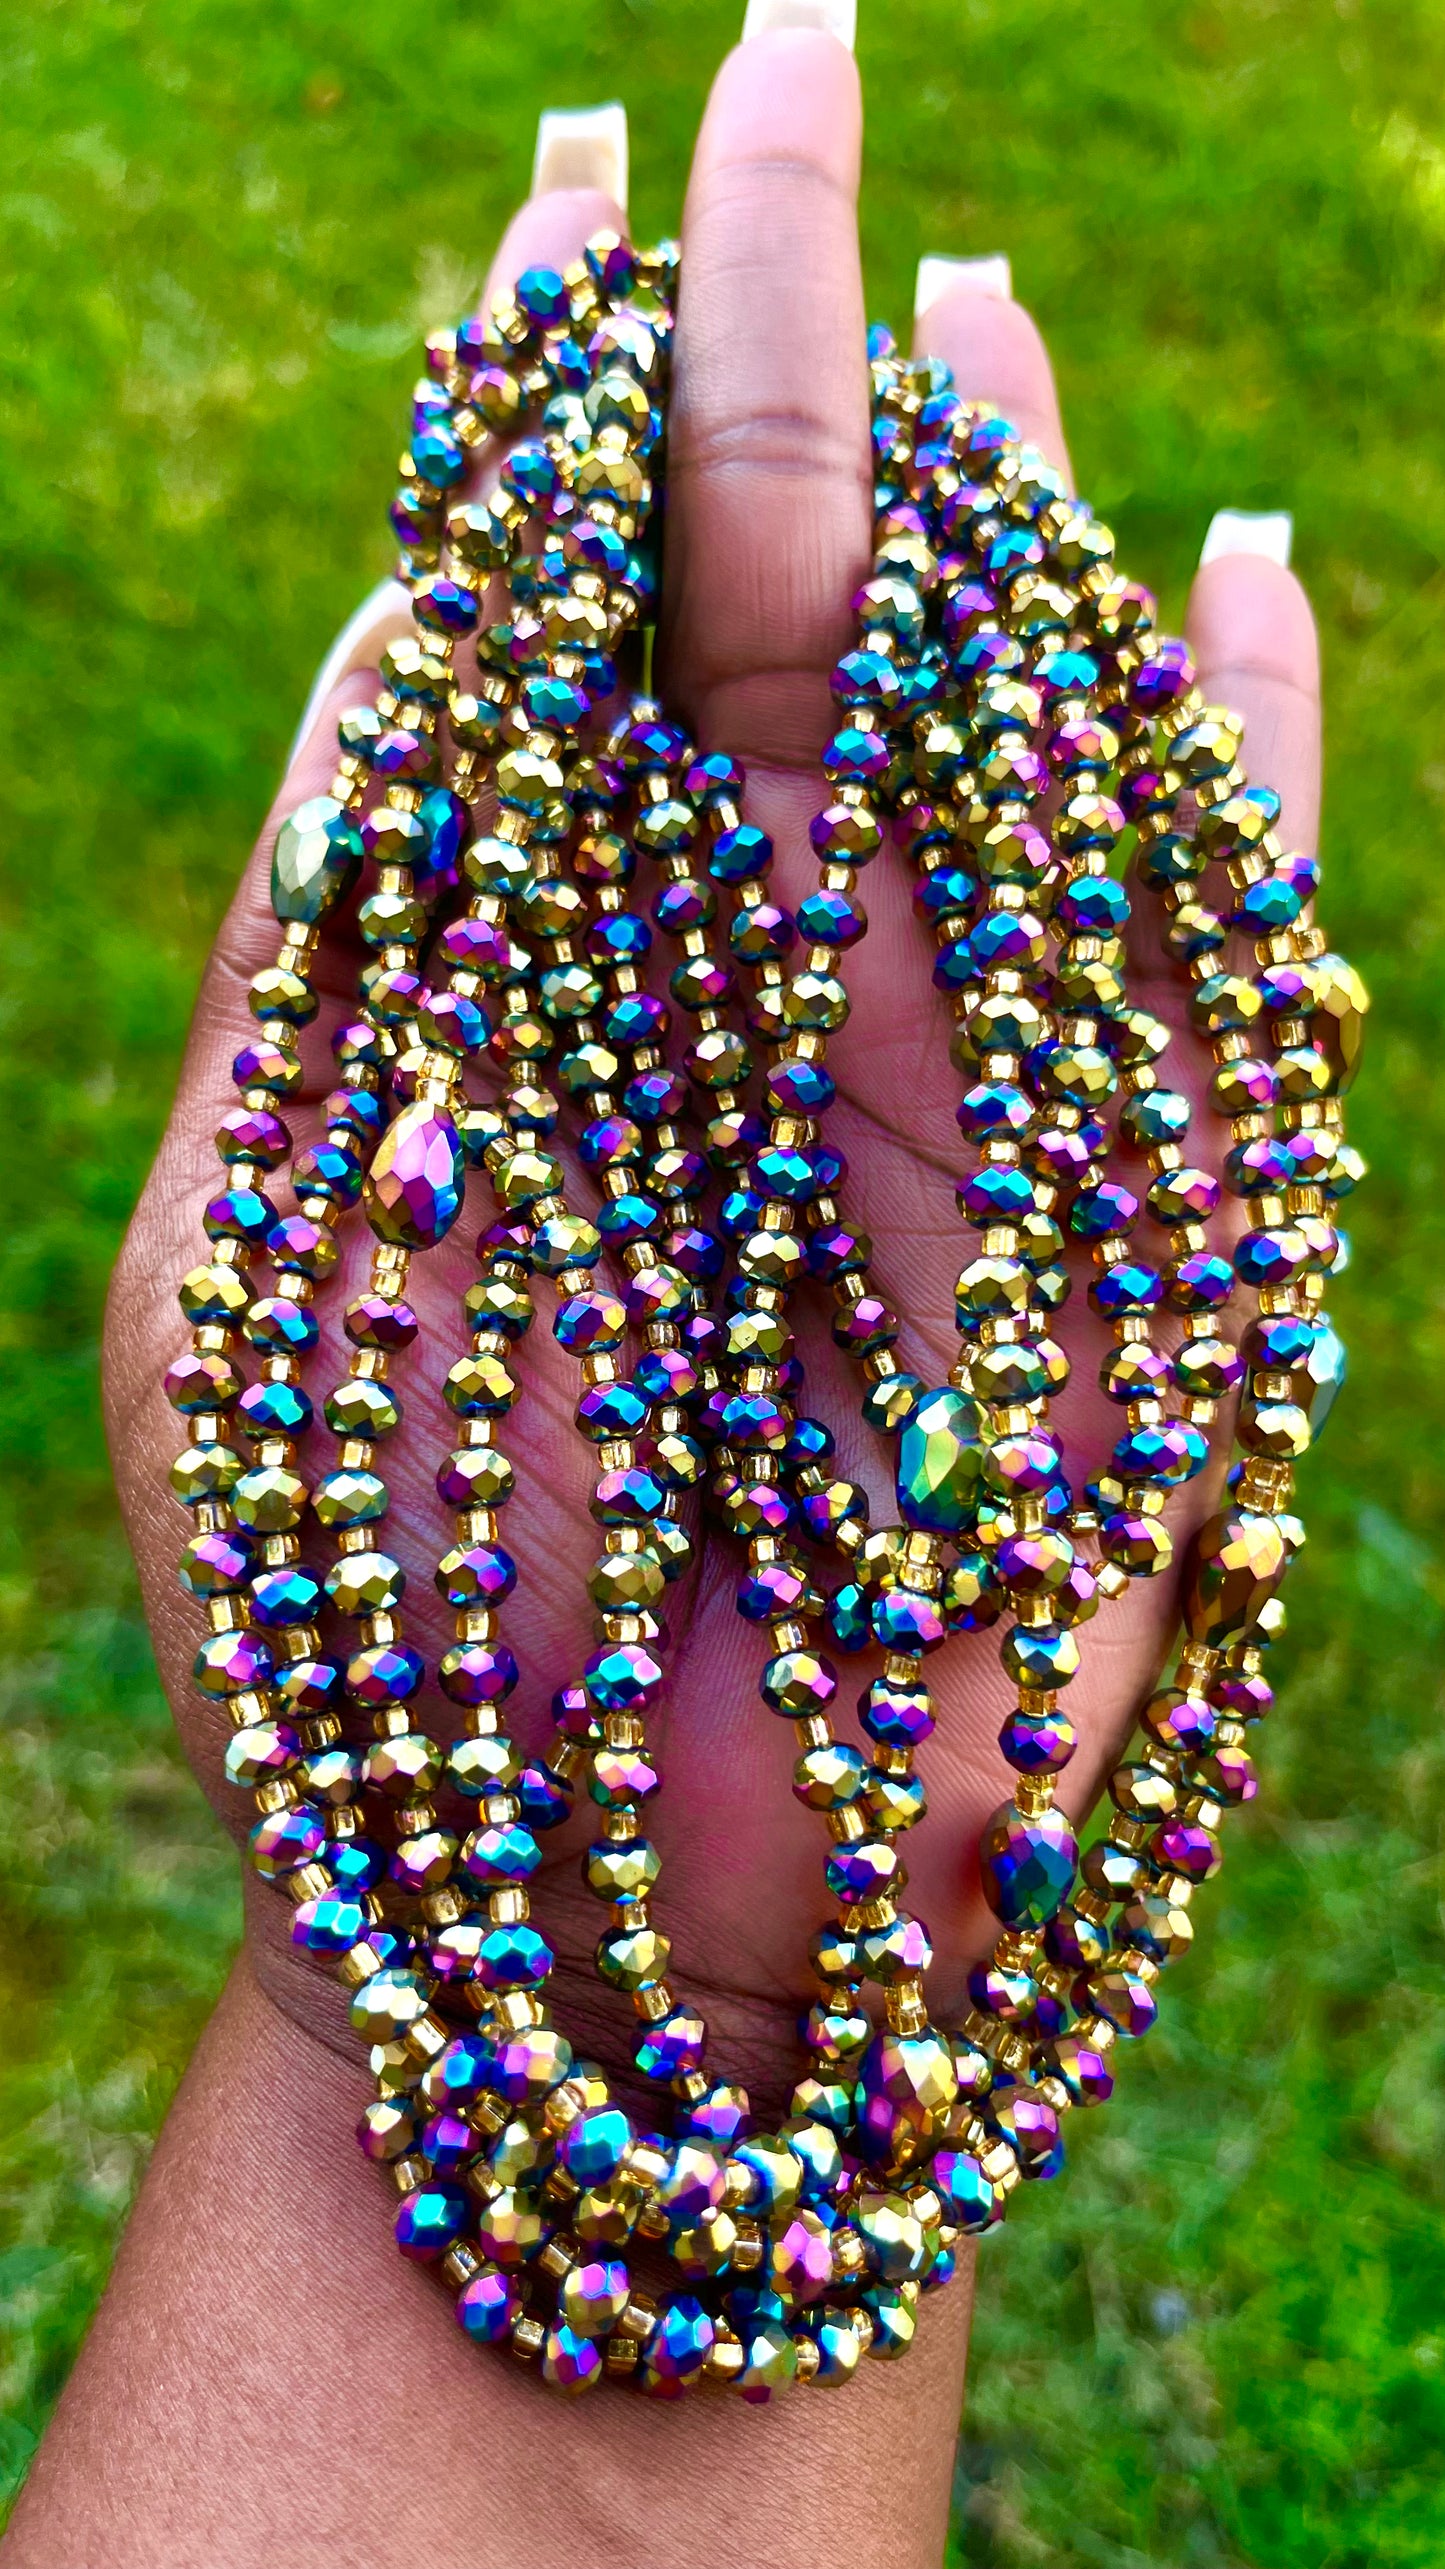 Lawrencia Waist Beads